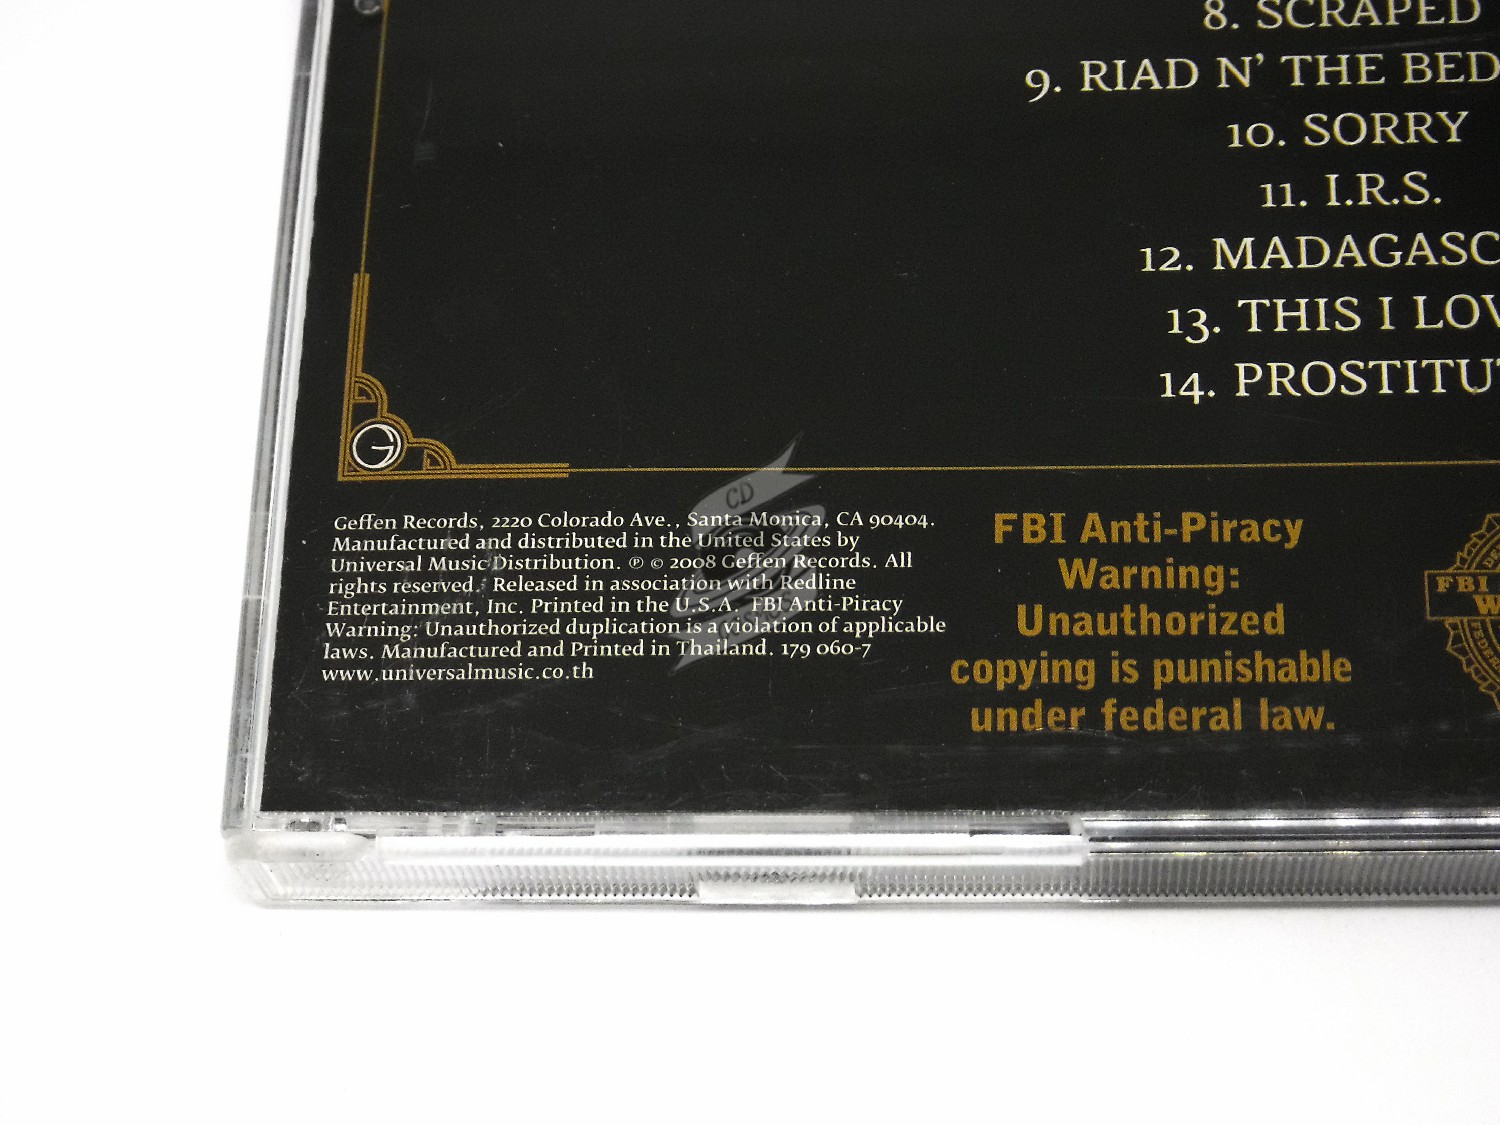 We Love Guitars Guns N Roses Chinese Democracy Gold CD A5 EGA Ungerahmt Display